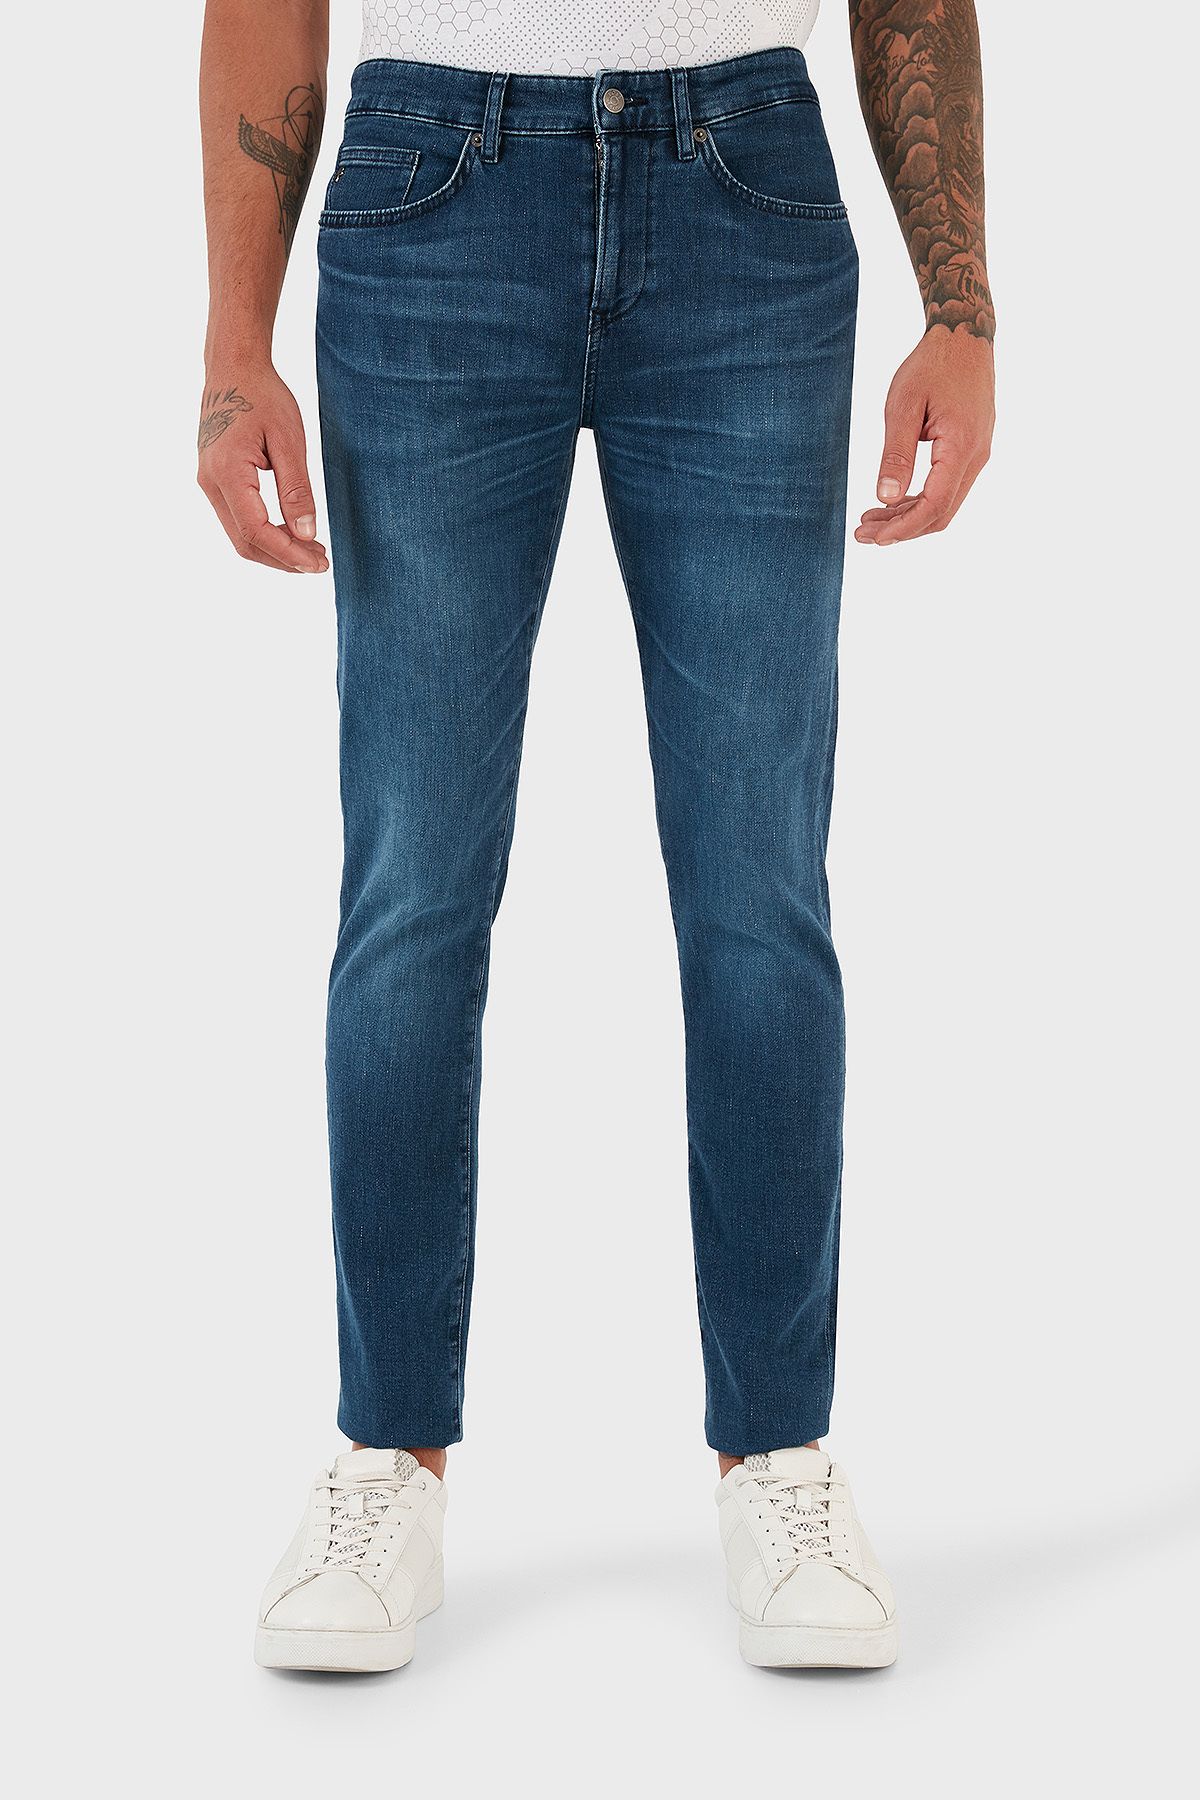 BOSS Delaware3-1 Streç Pamuklu Normal Bel Slim Fit Jeans Erkek Kot Pantolon 50496189 416